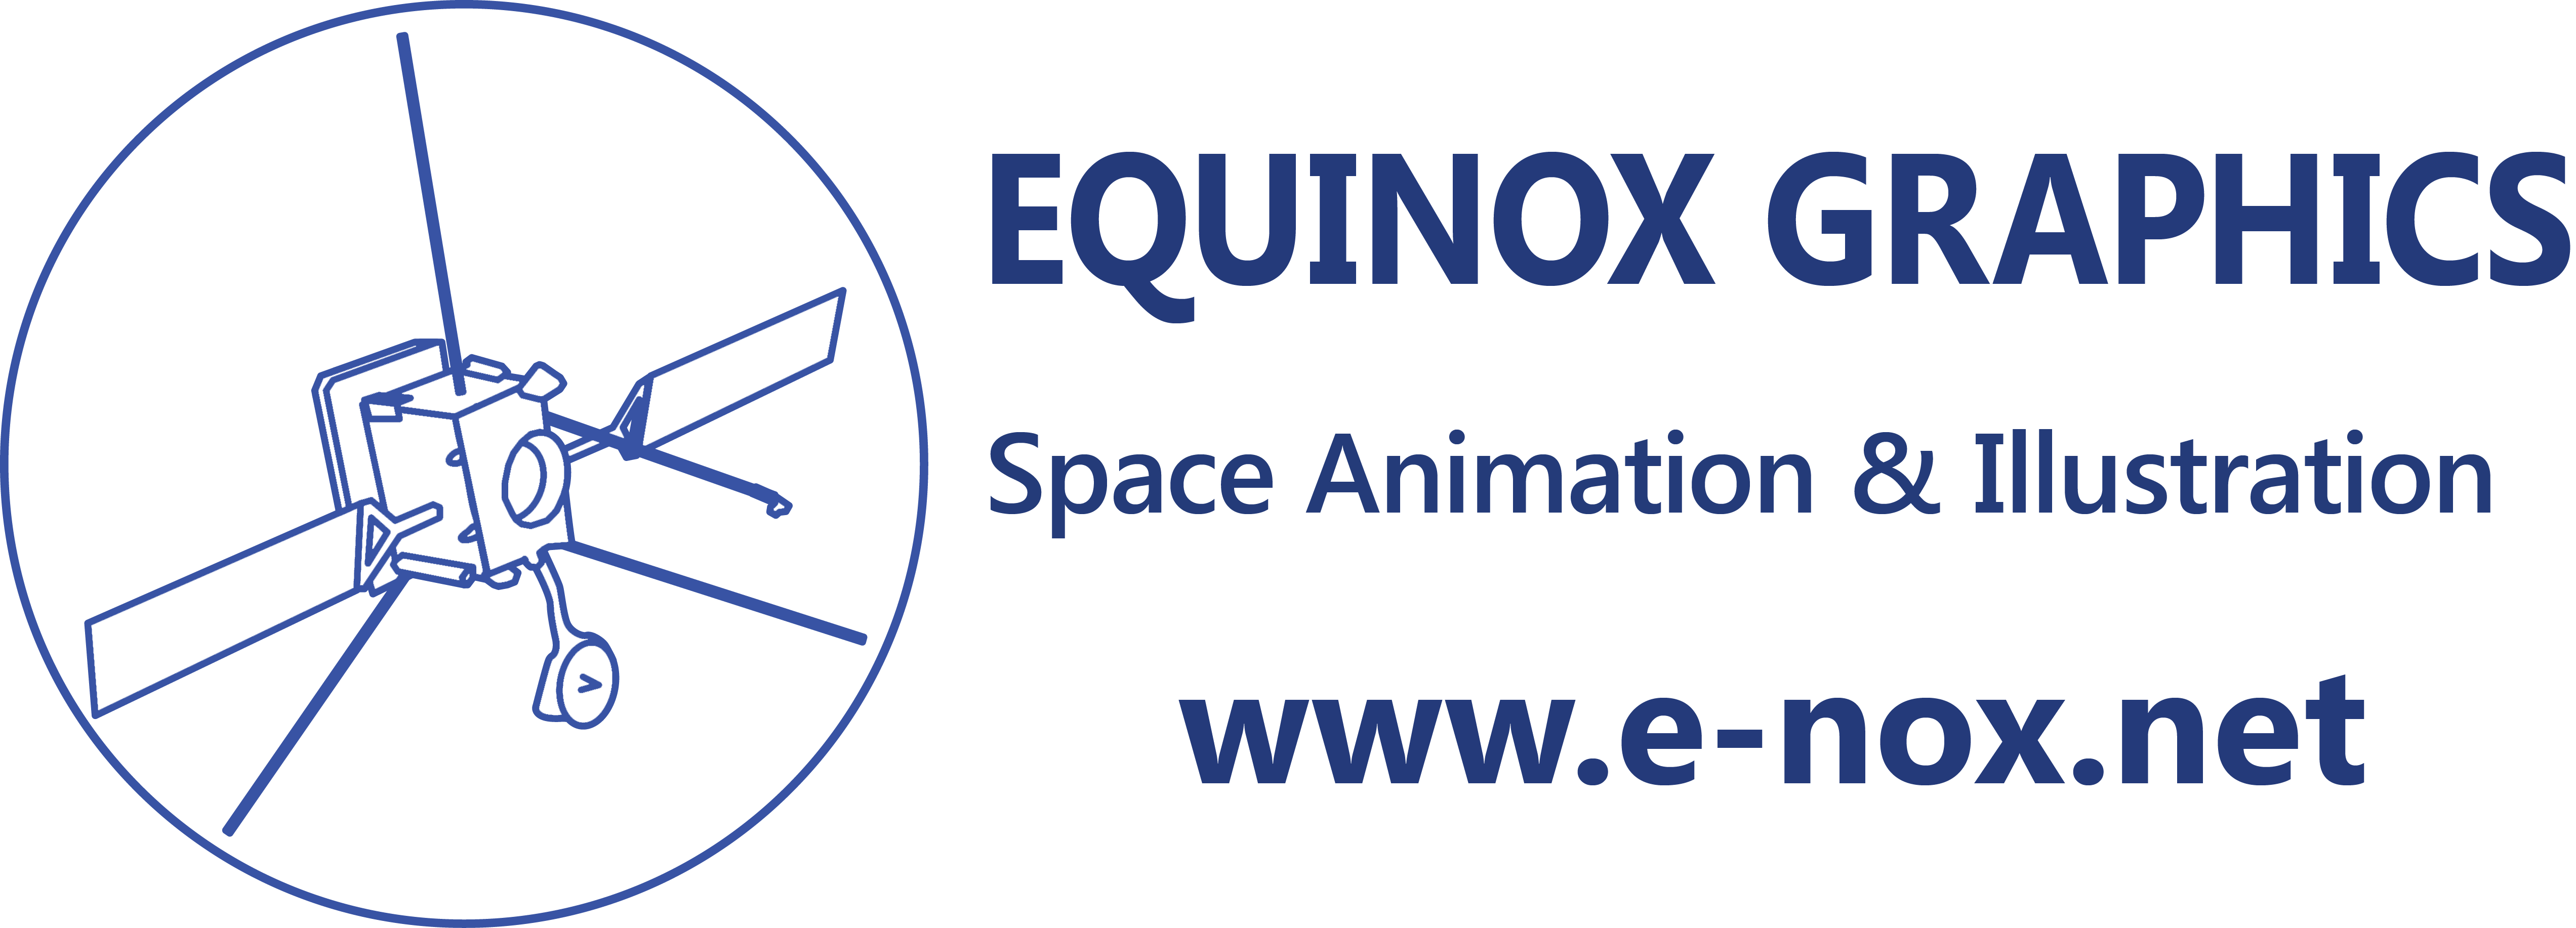 equinox graphics sponsor london